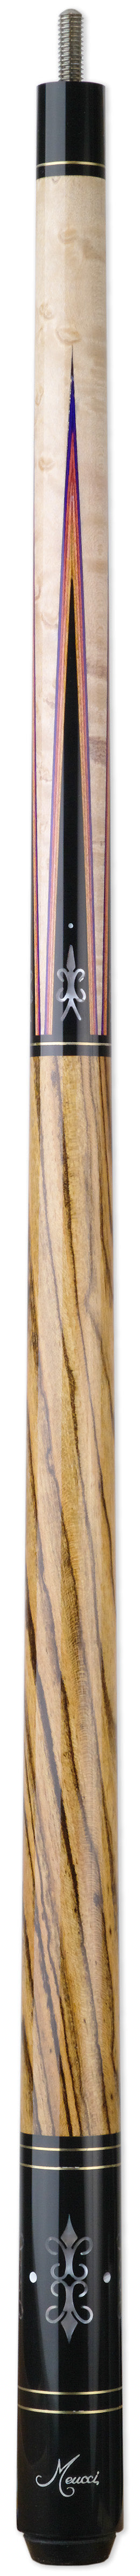 All Natural Wood ANW-3 -Meucci